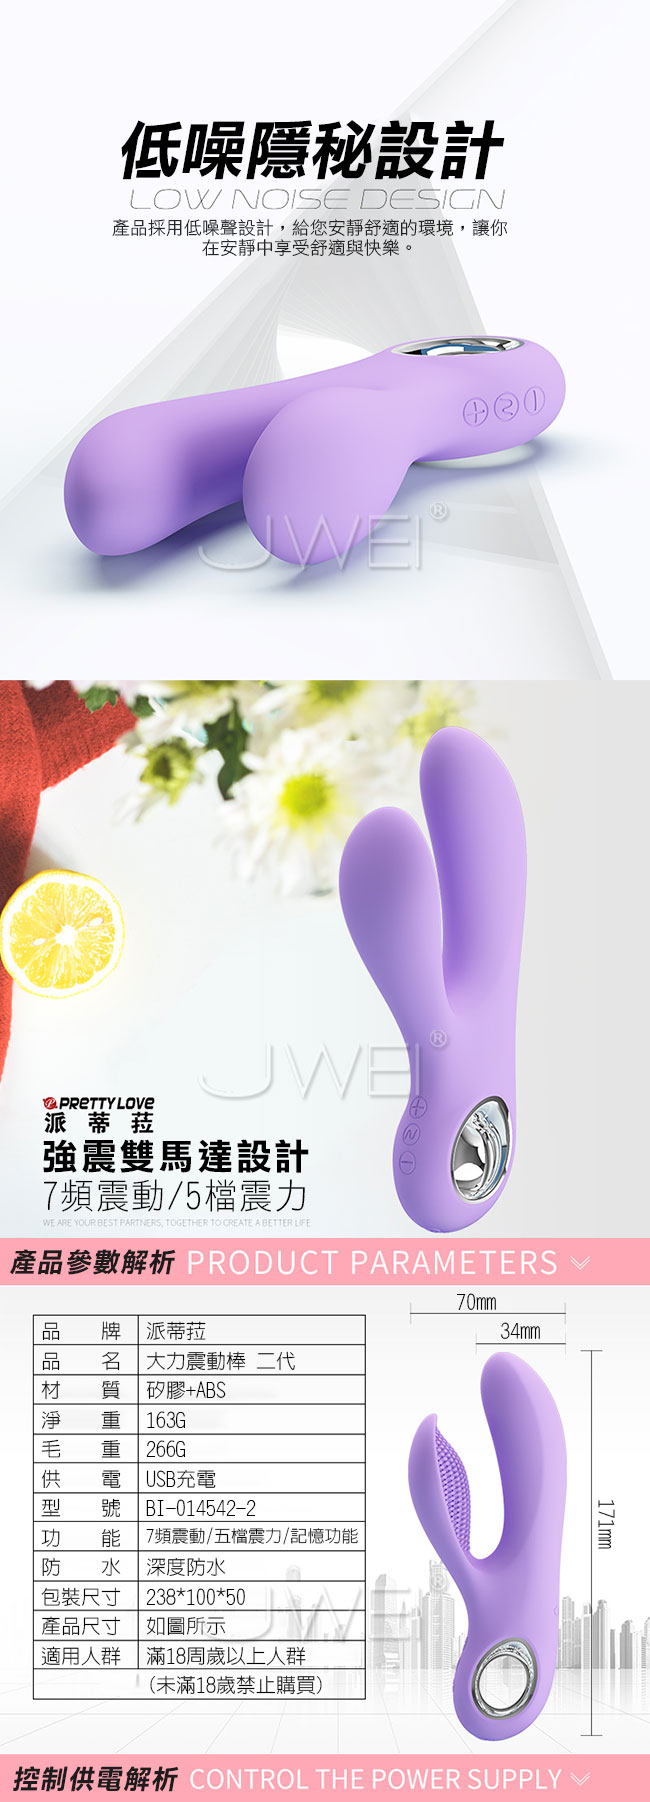 Pretty Love．大力Canrol 5檔7段凸點雙震USB充電G點按摩棒-紫色   (破盤出清商品)